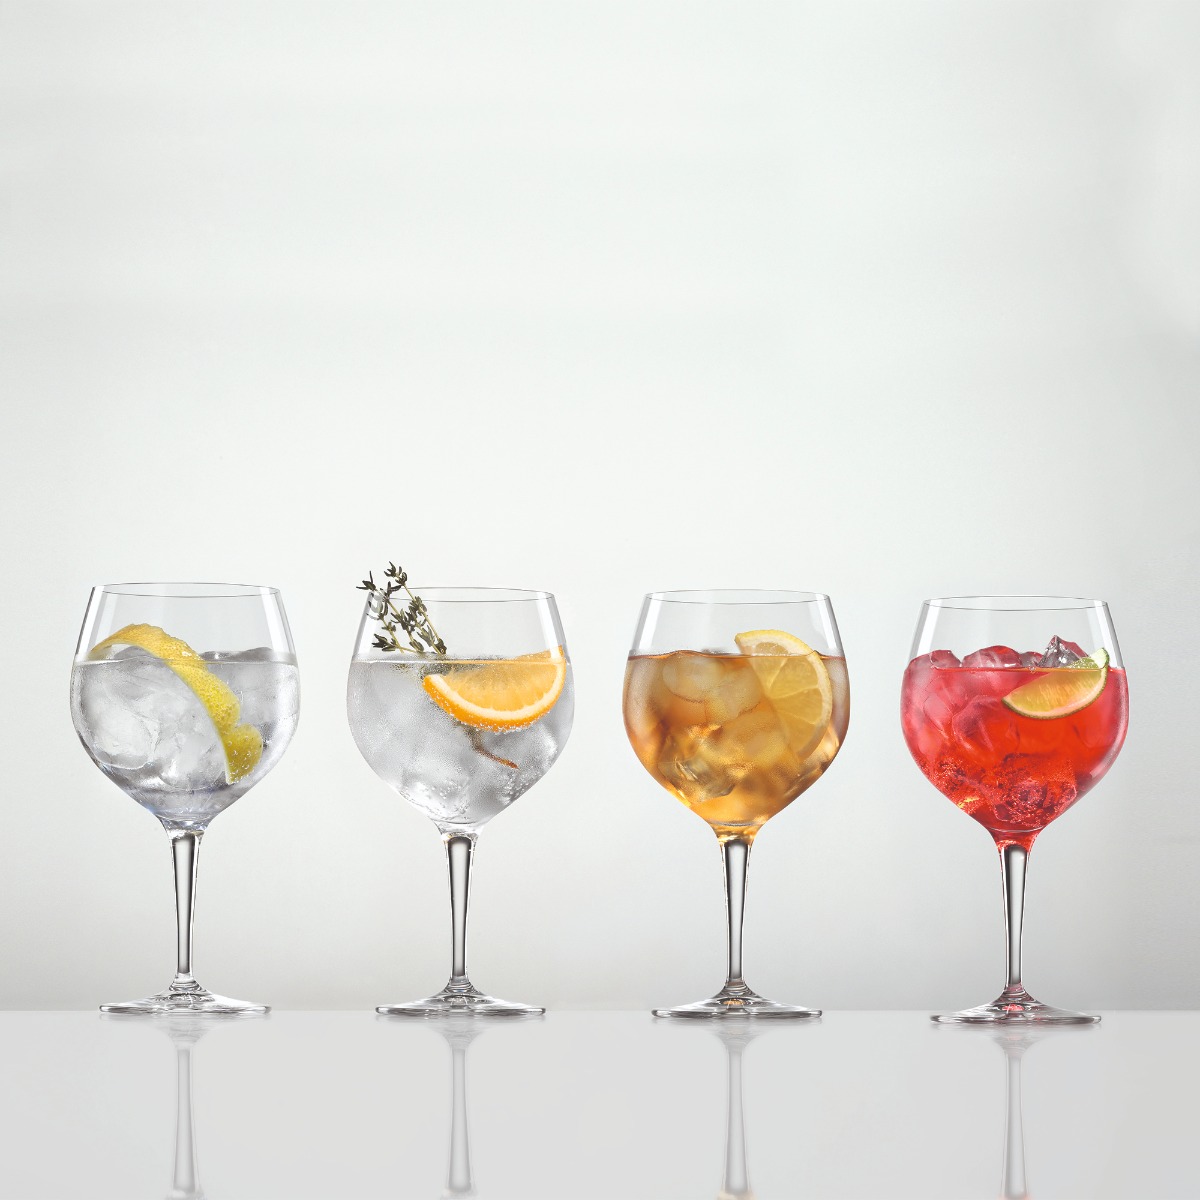 Spiegelau 21 oz Gin and Tonic Glass (set of 4)